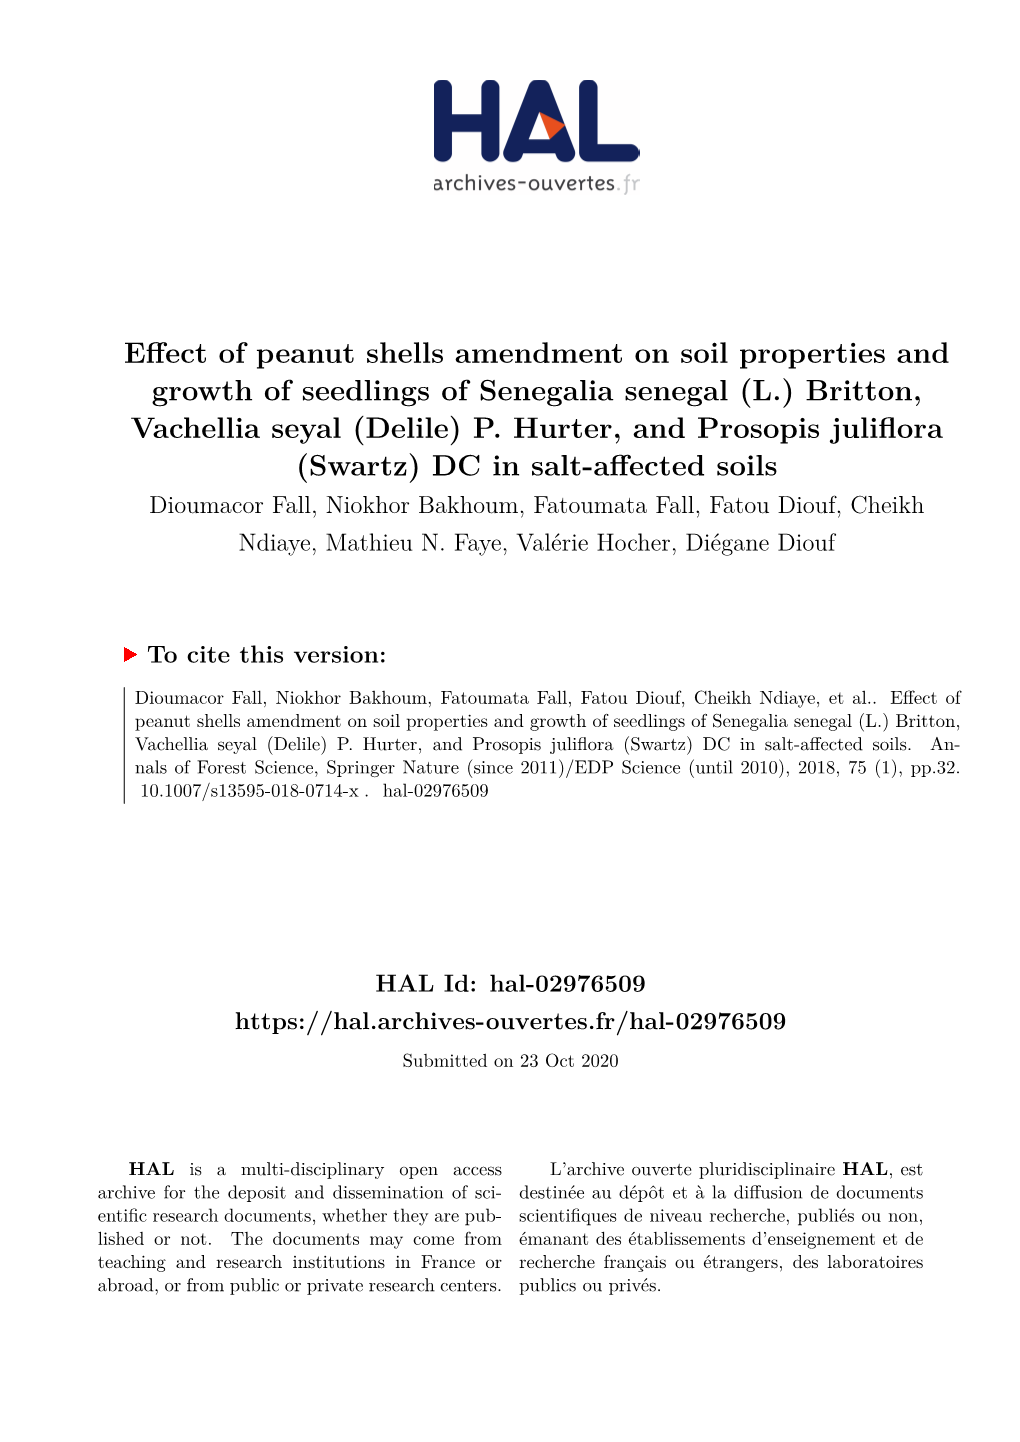 Effect of Peanut Shells Amendment on Soil Properties and Growth of Seedlings of Senegalia Senegal (L.) Britton, Vachellia Seyal (Delile) P